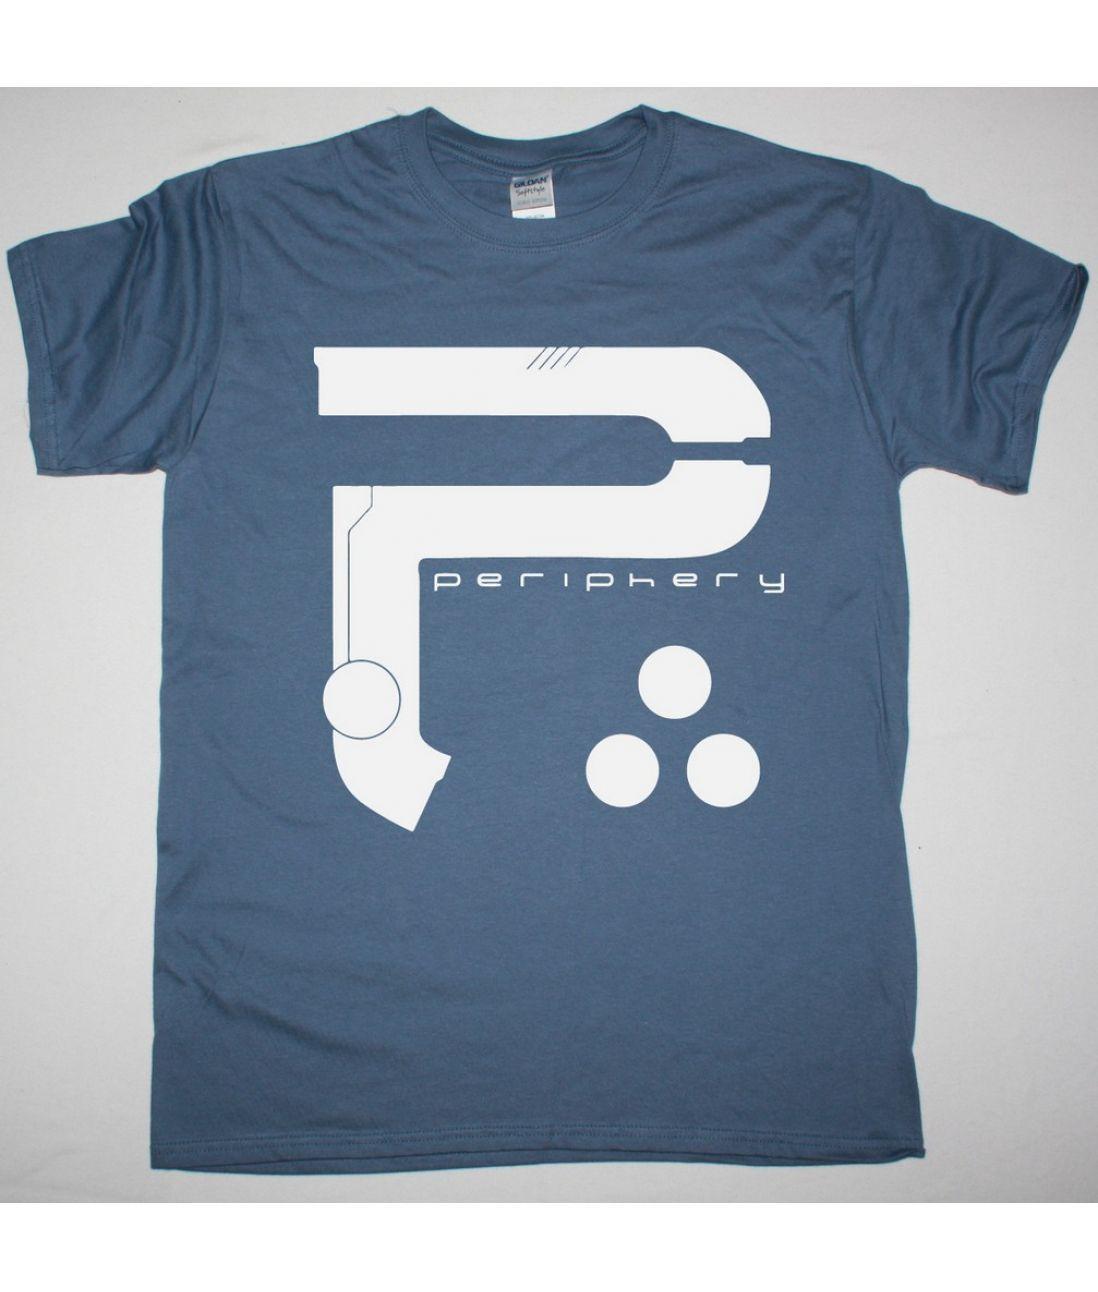 Big P Logo - PERIPHERY BIG P LOGO NEW INDIGO BLUE T SHIRT - Best Rock T-shirts